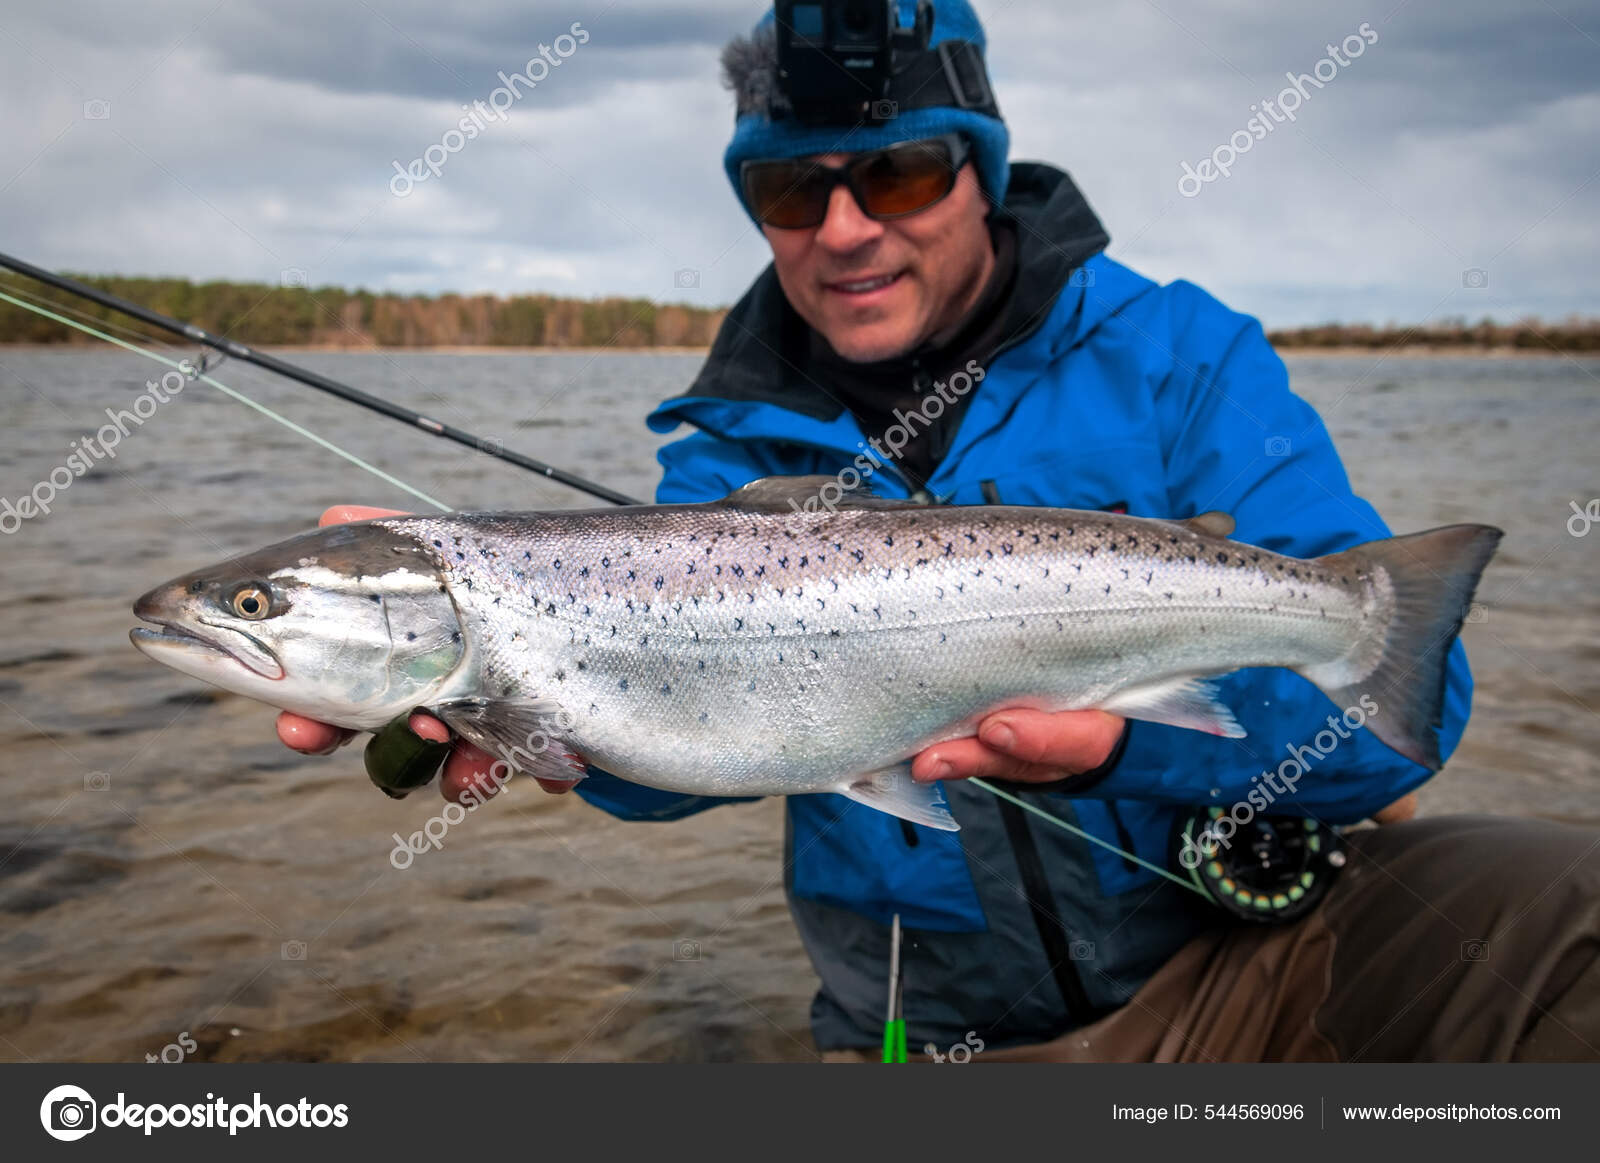 https://st.depositphotos.com/1007545/54456/i/1600/depositphotos_544569096-stock-photo-april-silver-sea-trout-flyrod.jpg